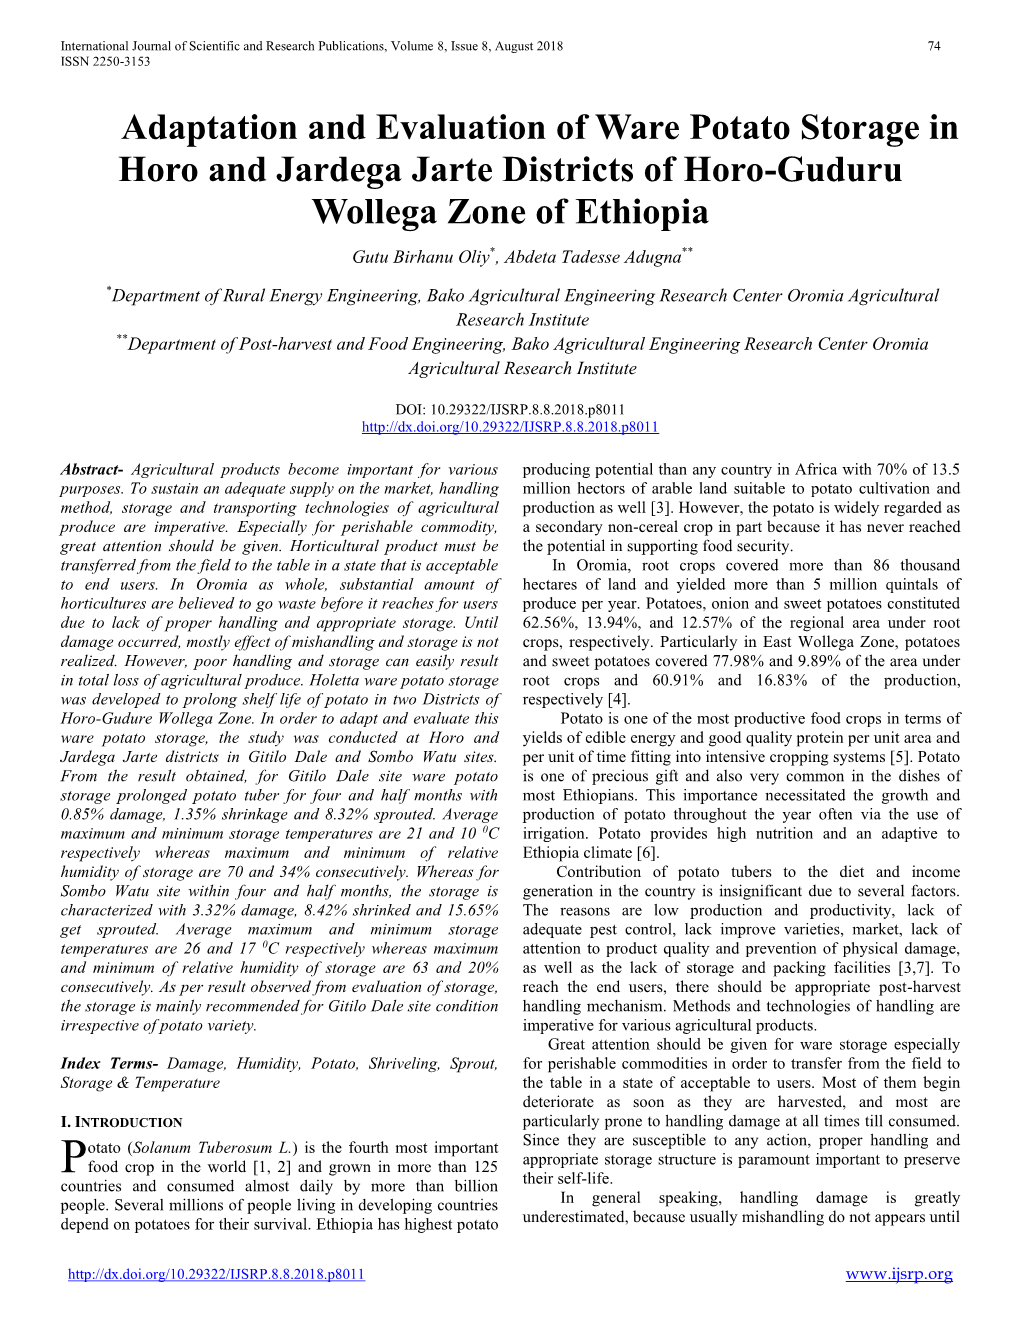 Adaptation and Evaluation of Ware Potato Storage in Horo and Jardega Jarte Districts of Horo-Guduru Wollega Zone of Ethiopia